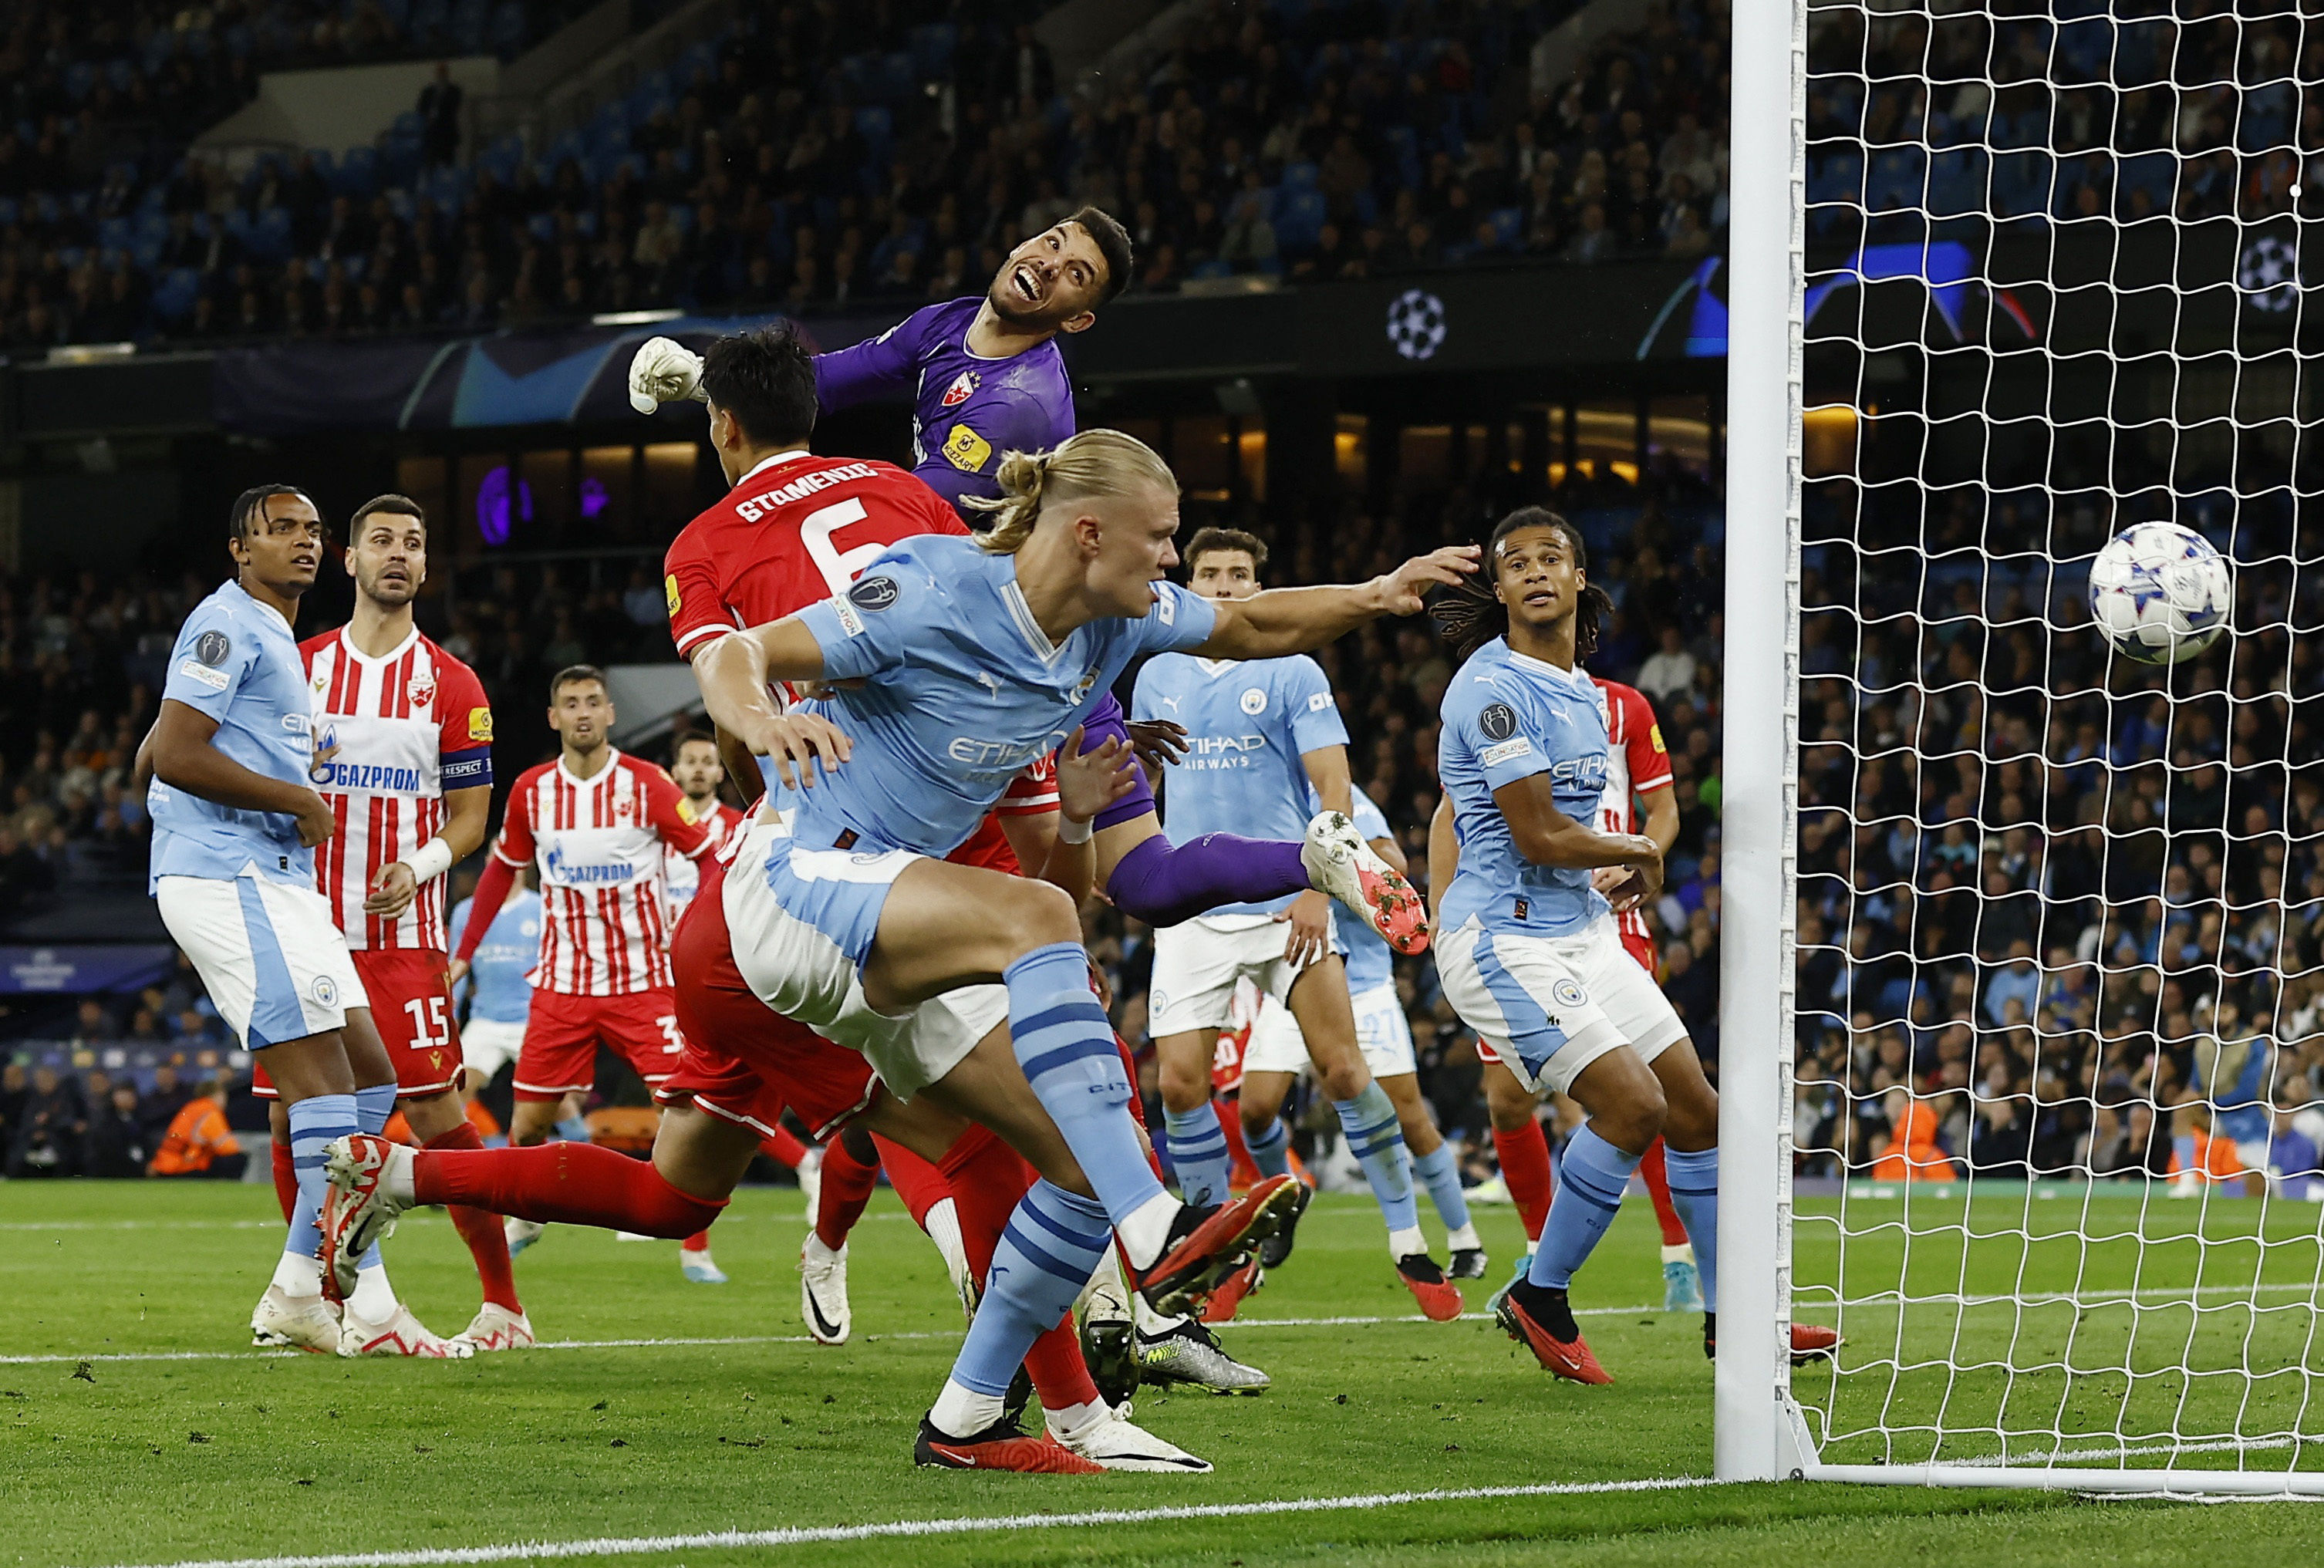 Football: Soccer-Alvarez helps Man City sweep past Red Star